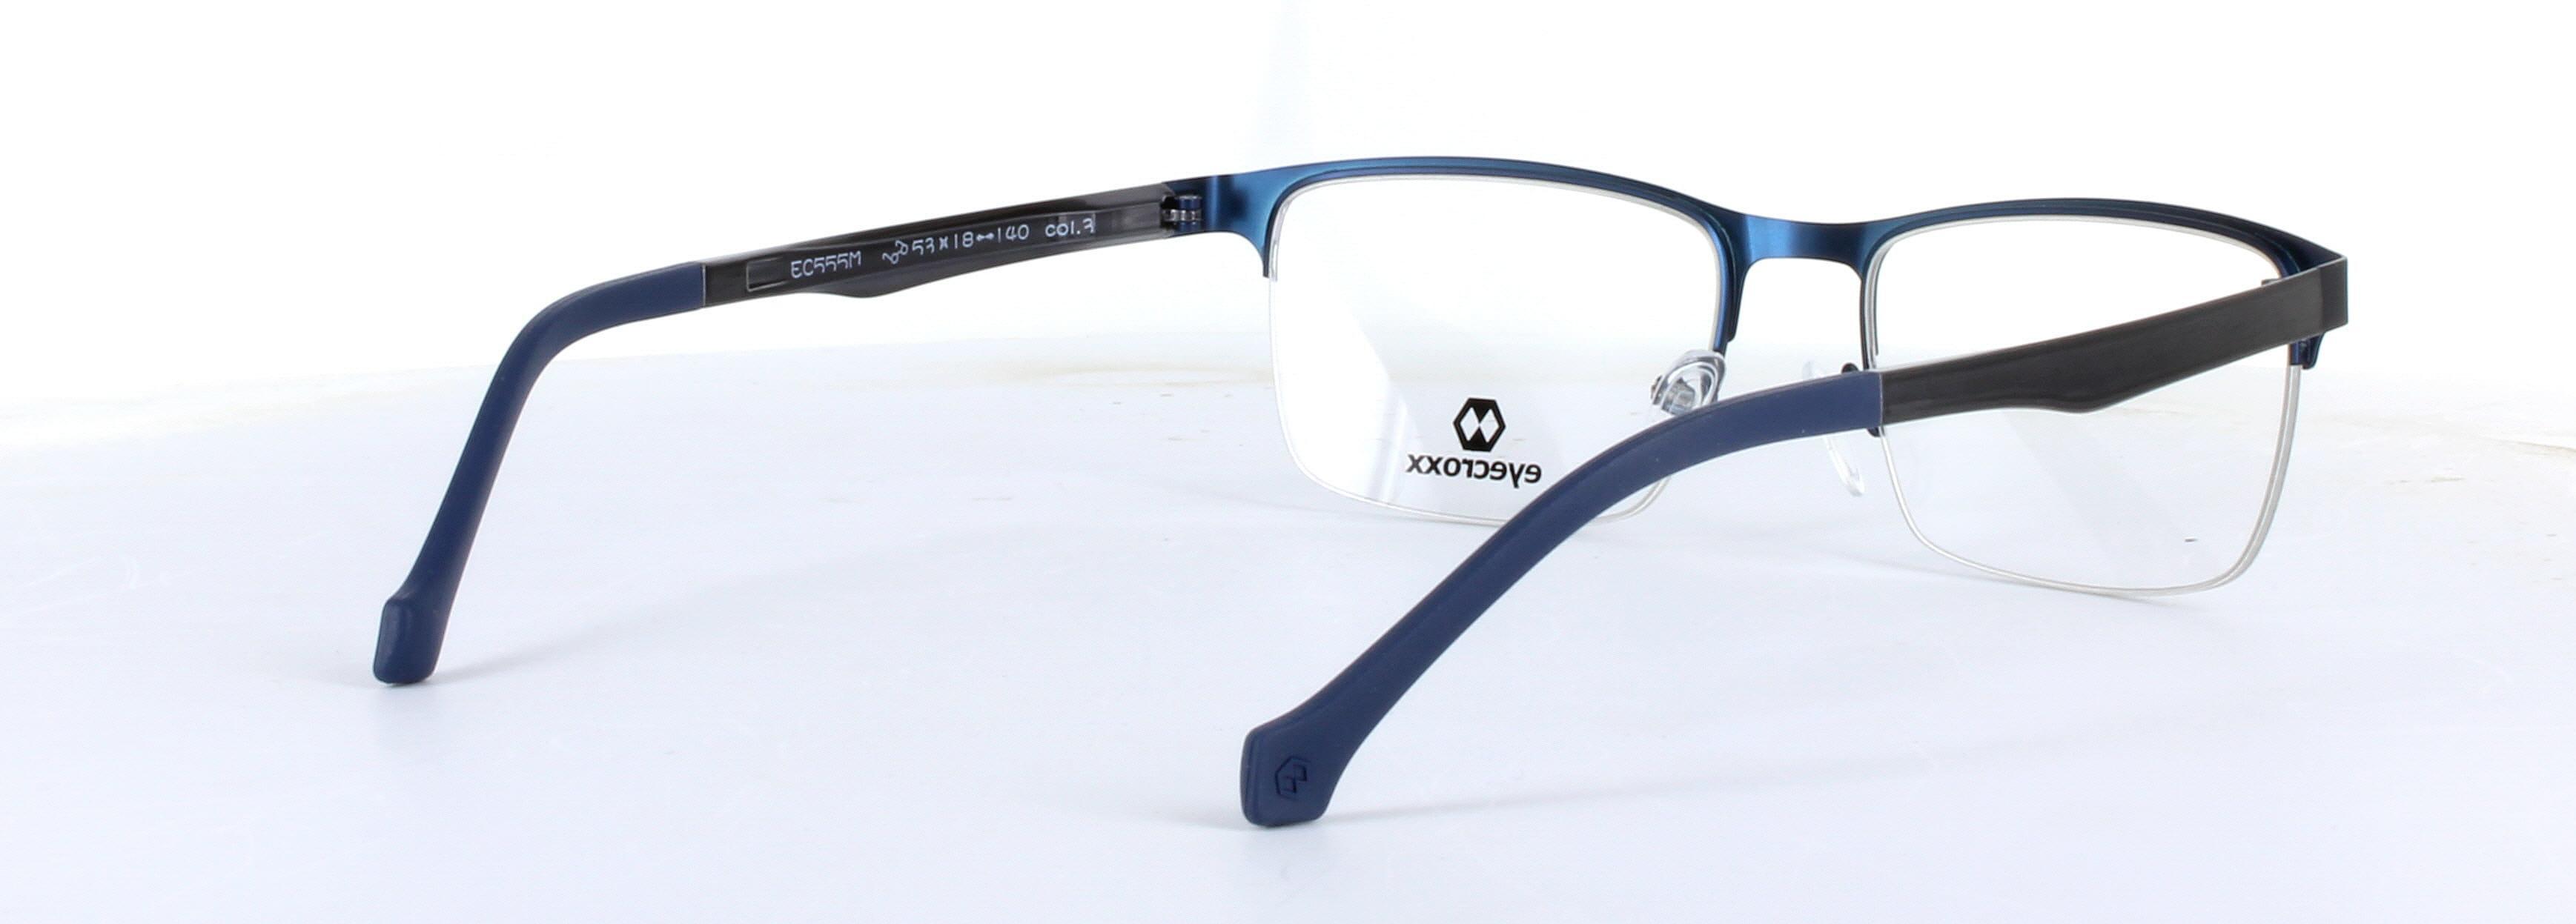 Eyecroxx 555 Blue Semi Rimless Metal Glasses - Image View 4